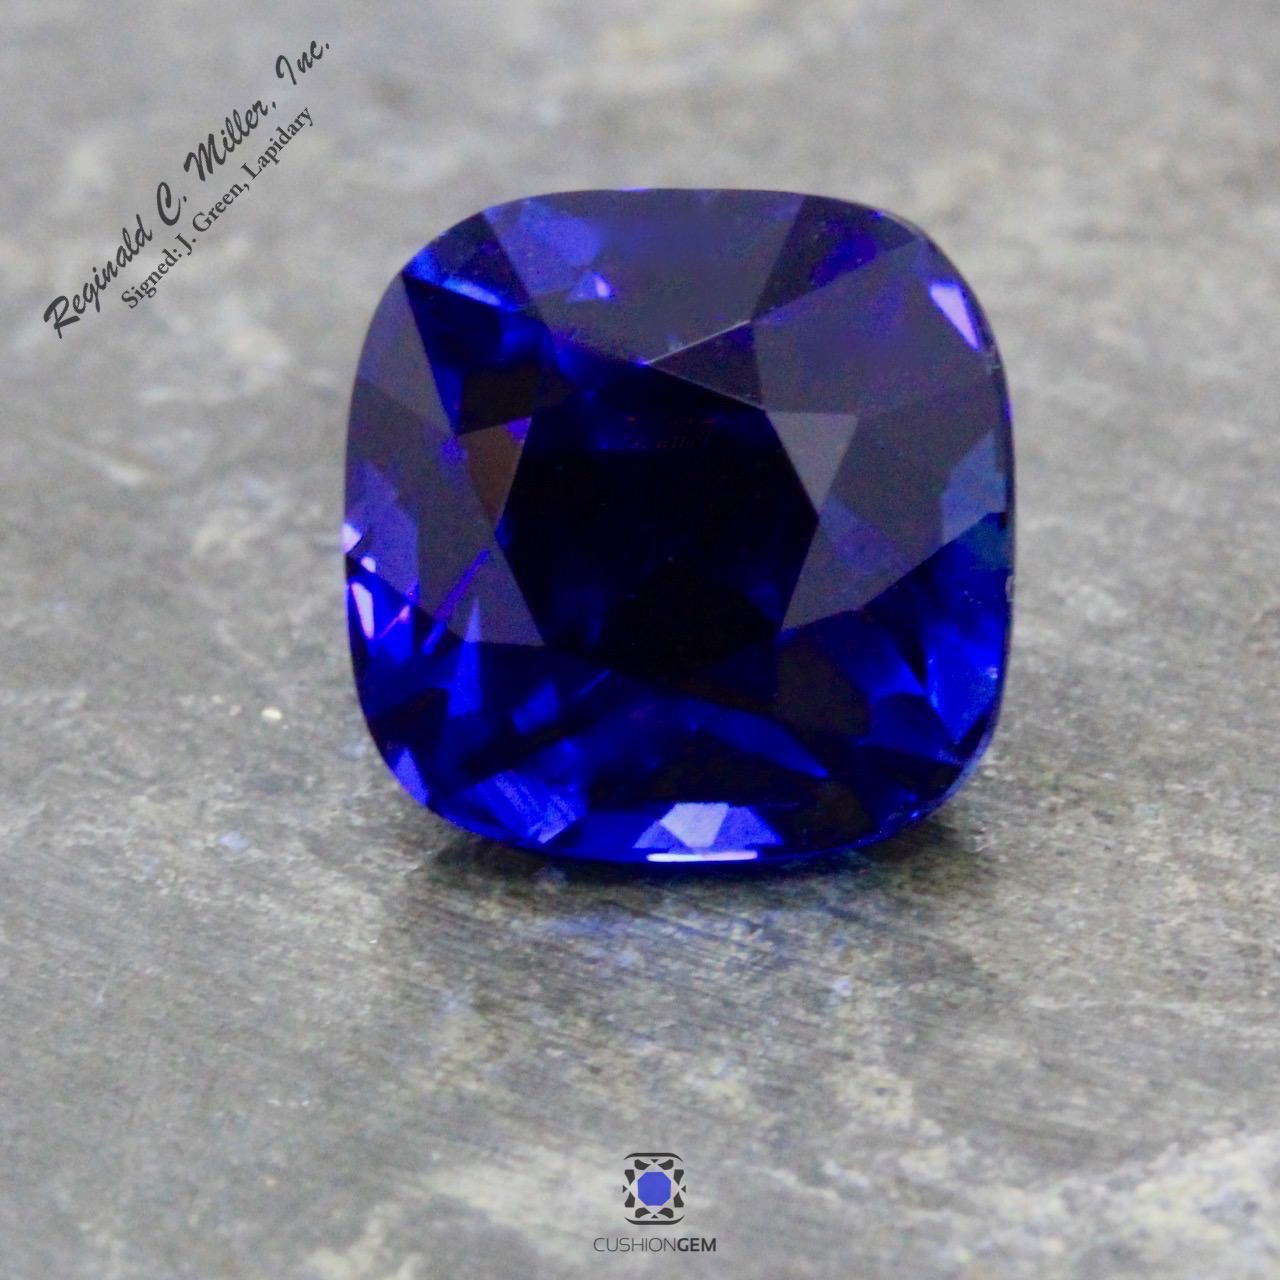 Natural Sapphire Emerald Cut 7 x 5mm Excellent Cut Purple Sapphire 1.195 Carat Loose Stone